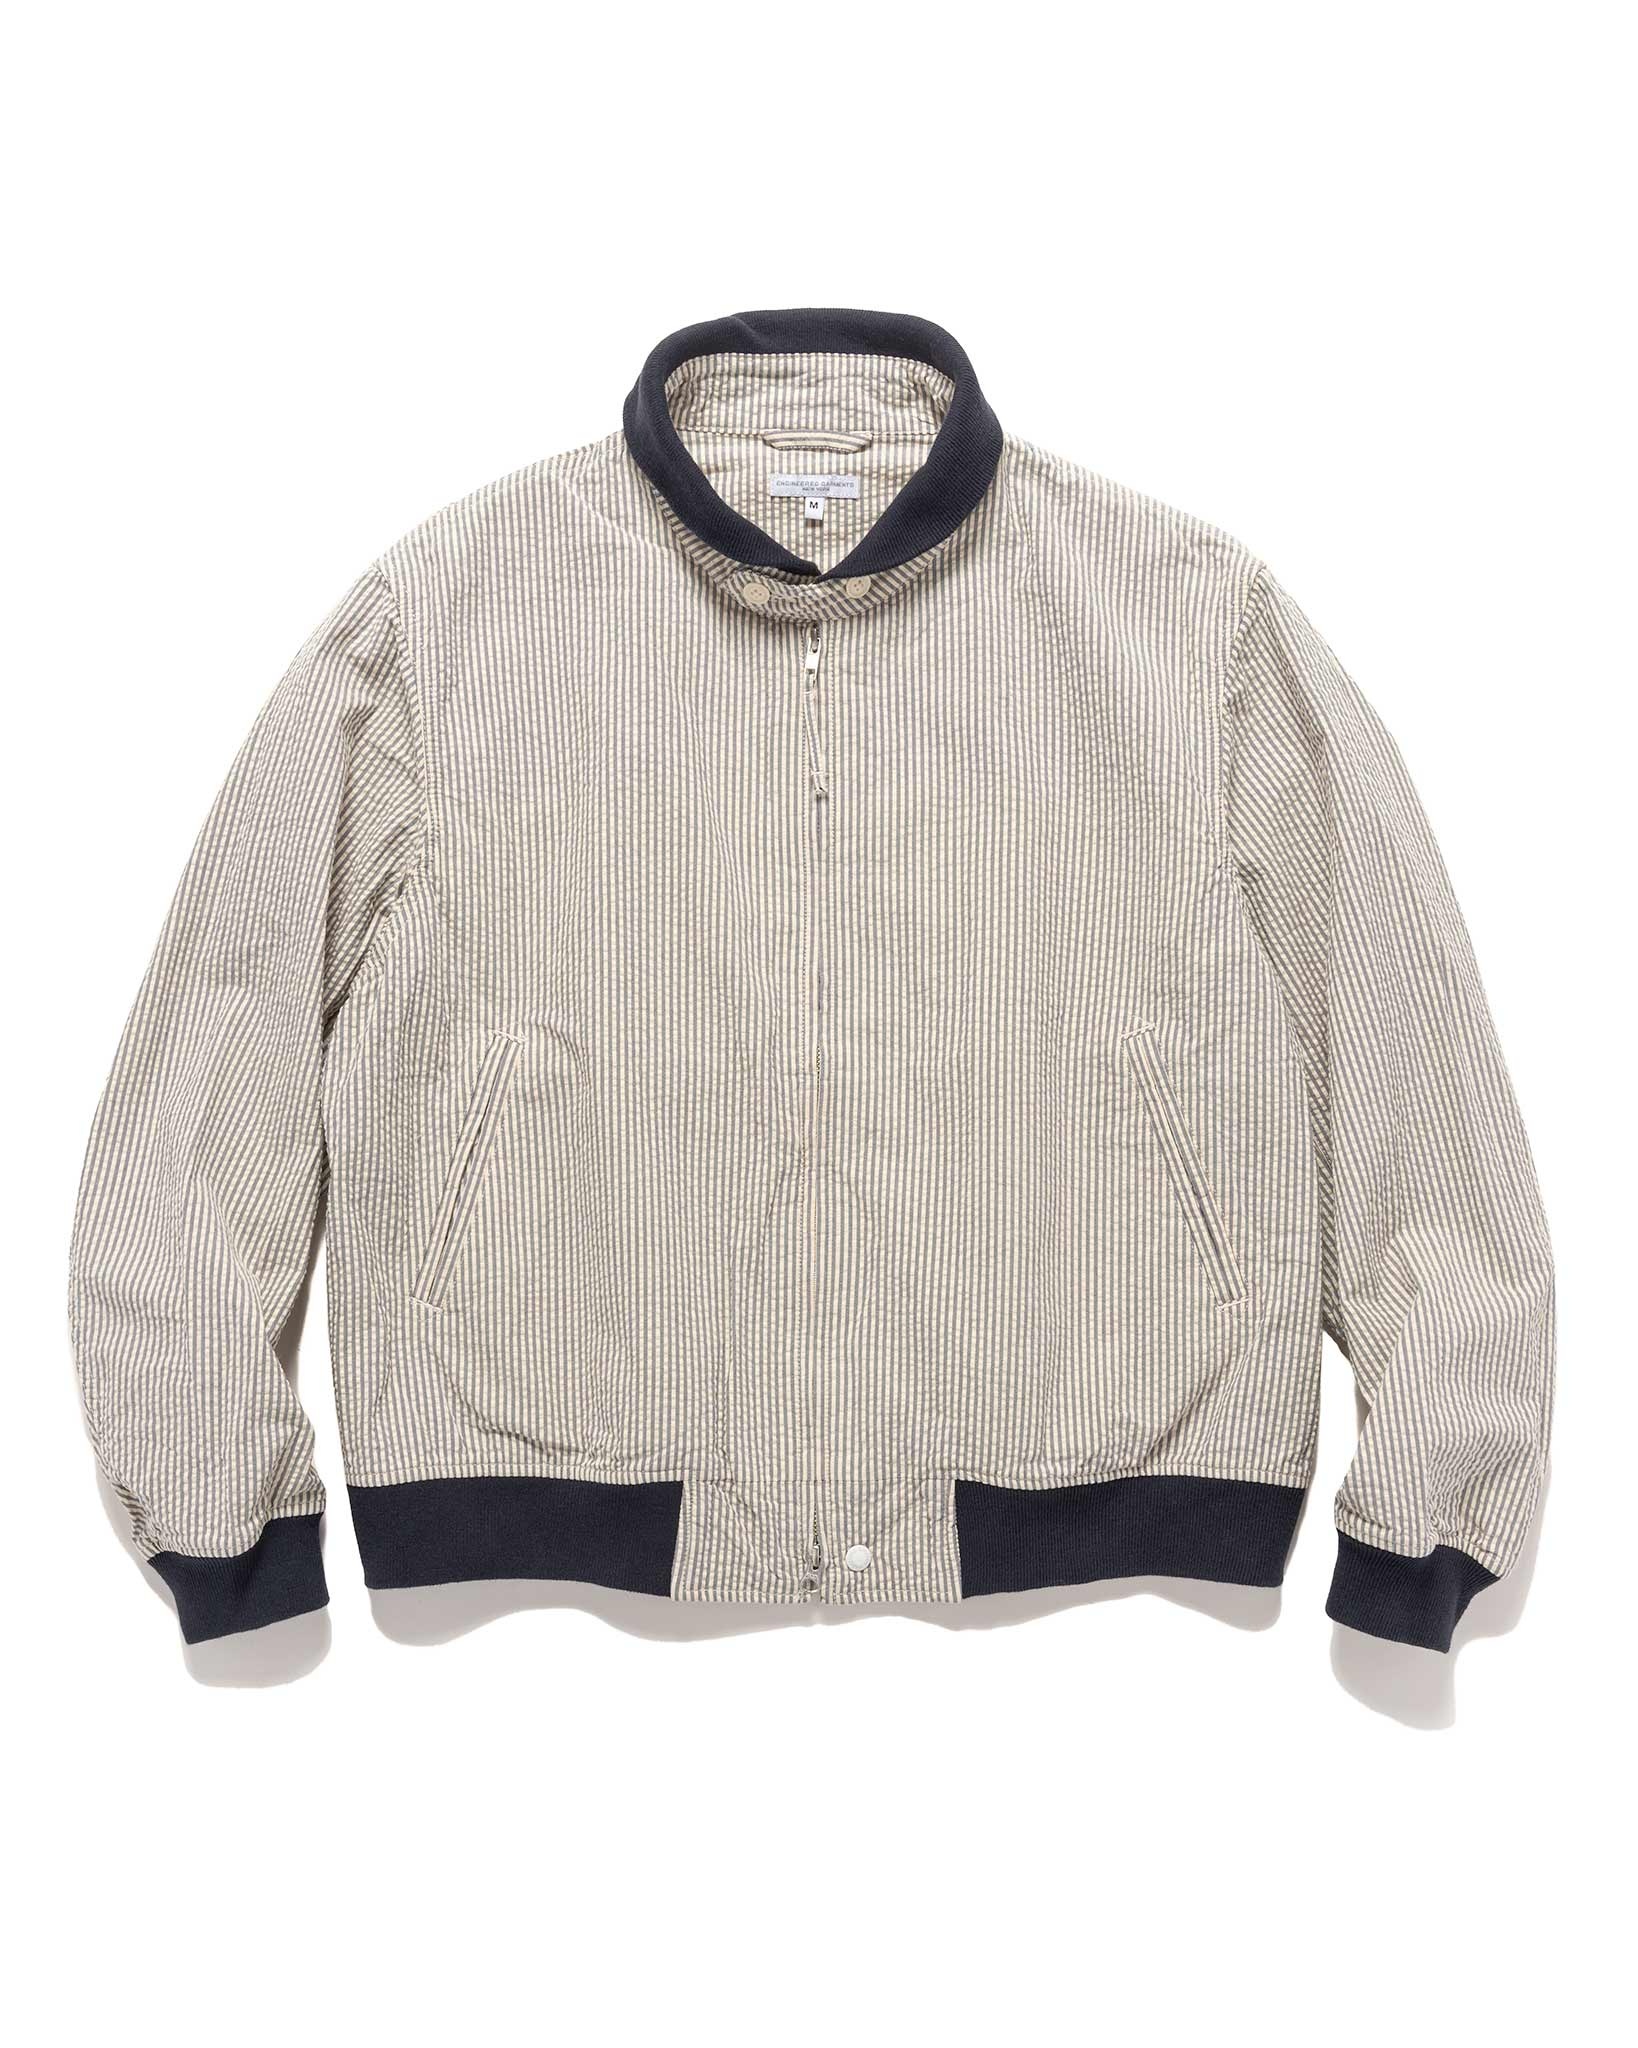 LL Jacket Cotton Seersucker Navy/ Natural - 1